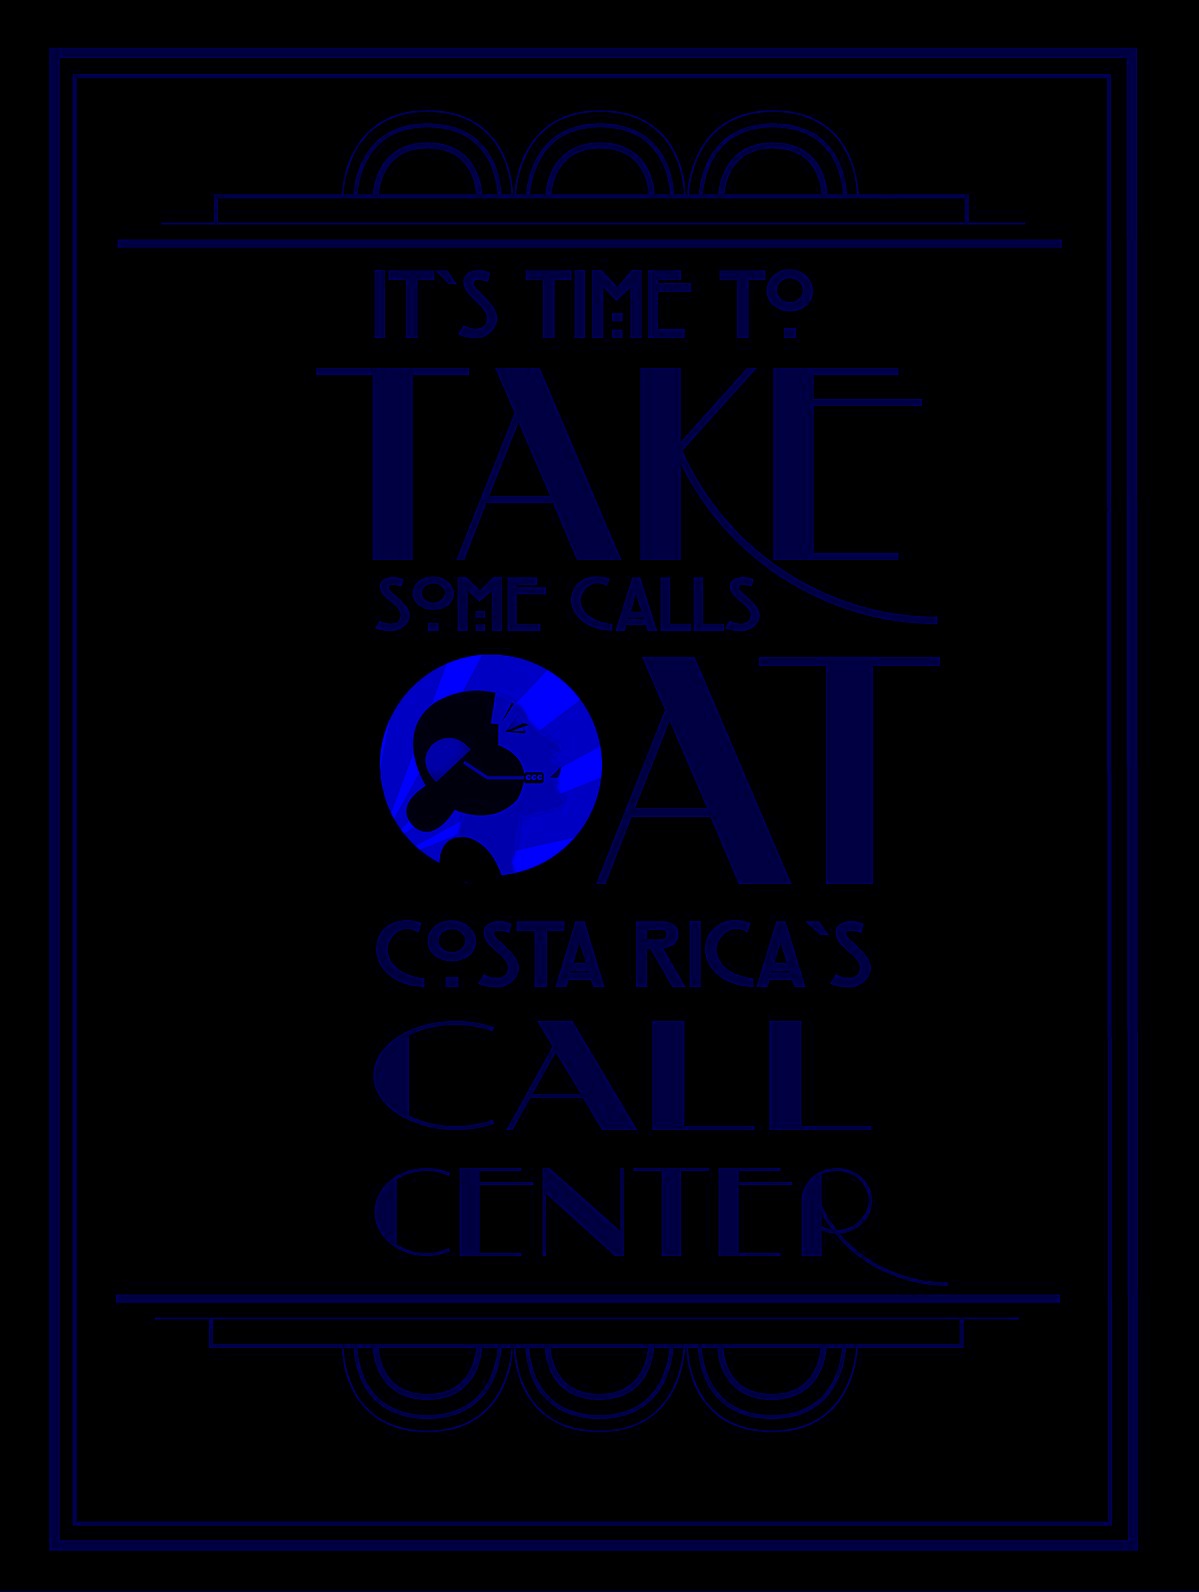 CALL CENTRE SHRINKAGE DEFINITION COSTA RICA.jpg  by richardblank